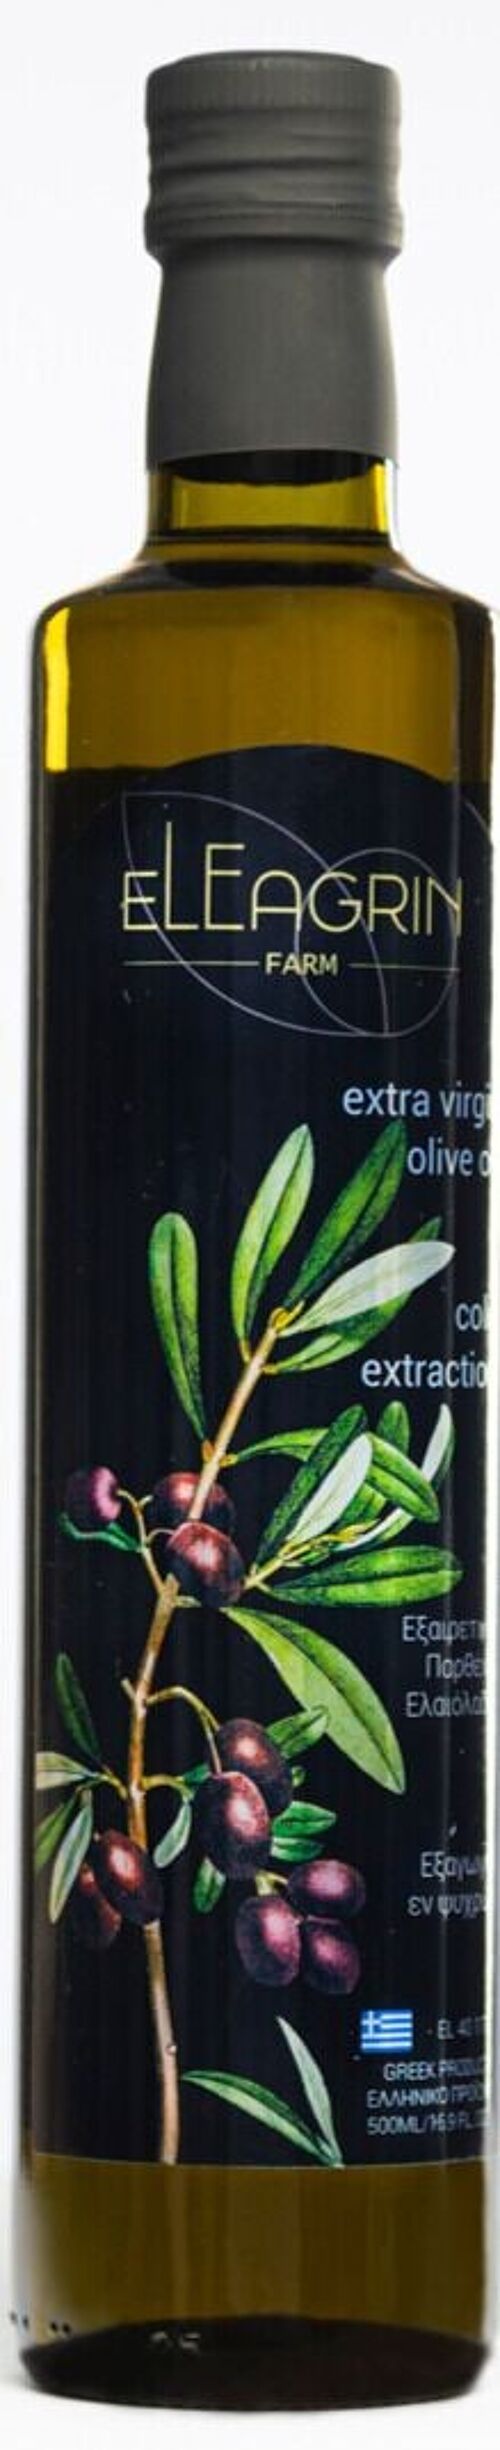 Eleagrin Extra Virgin Olive Oil 750ml